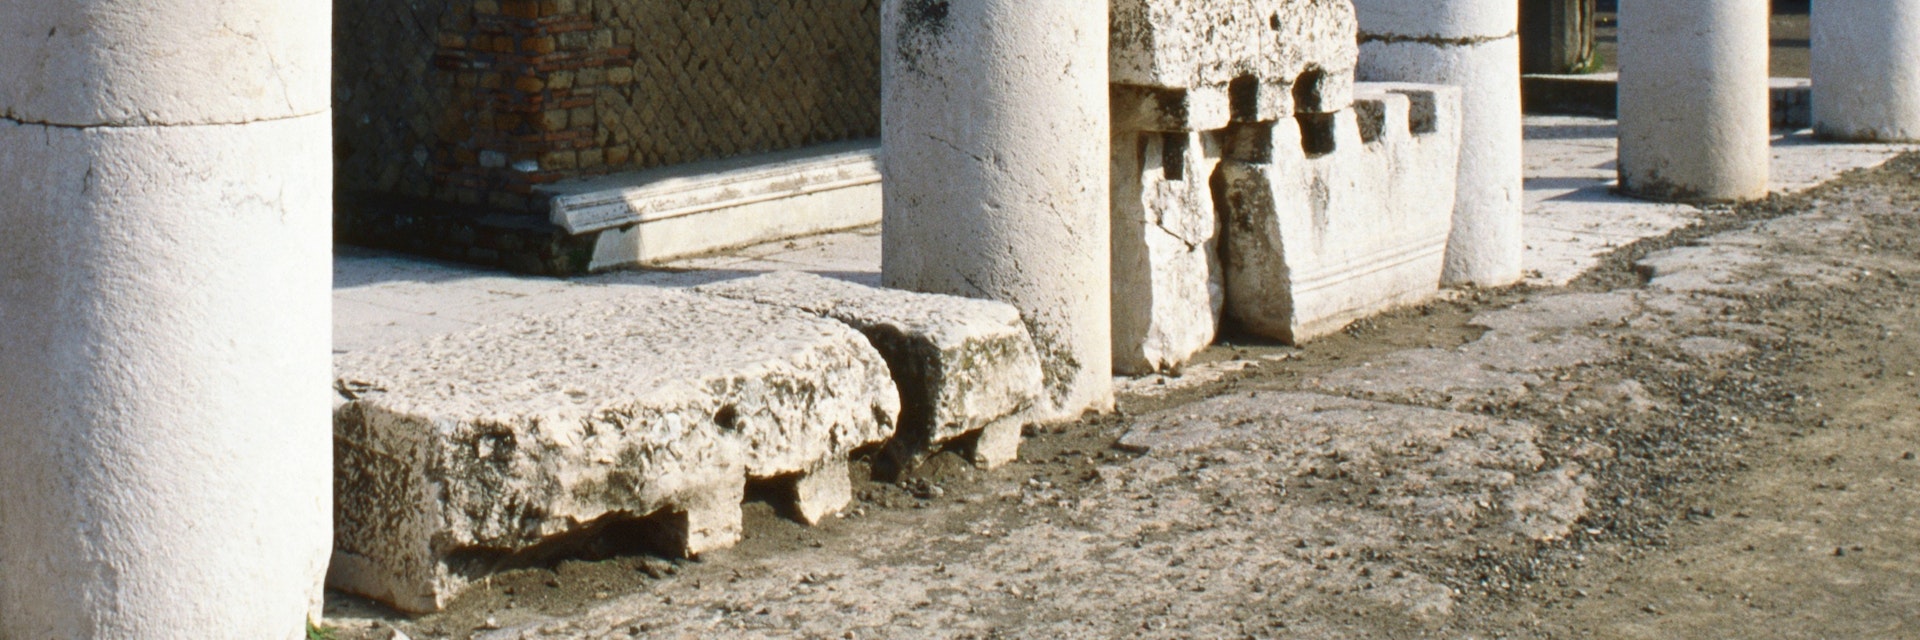 Pompeii ruins - Pompeii, Campania